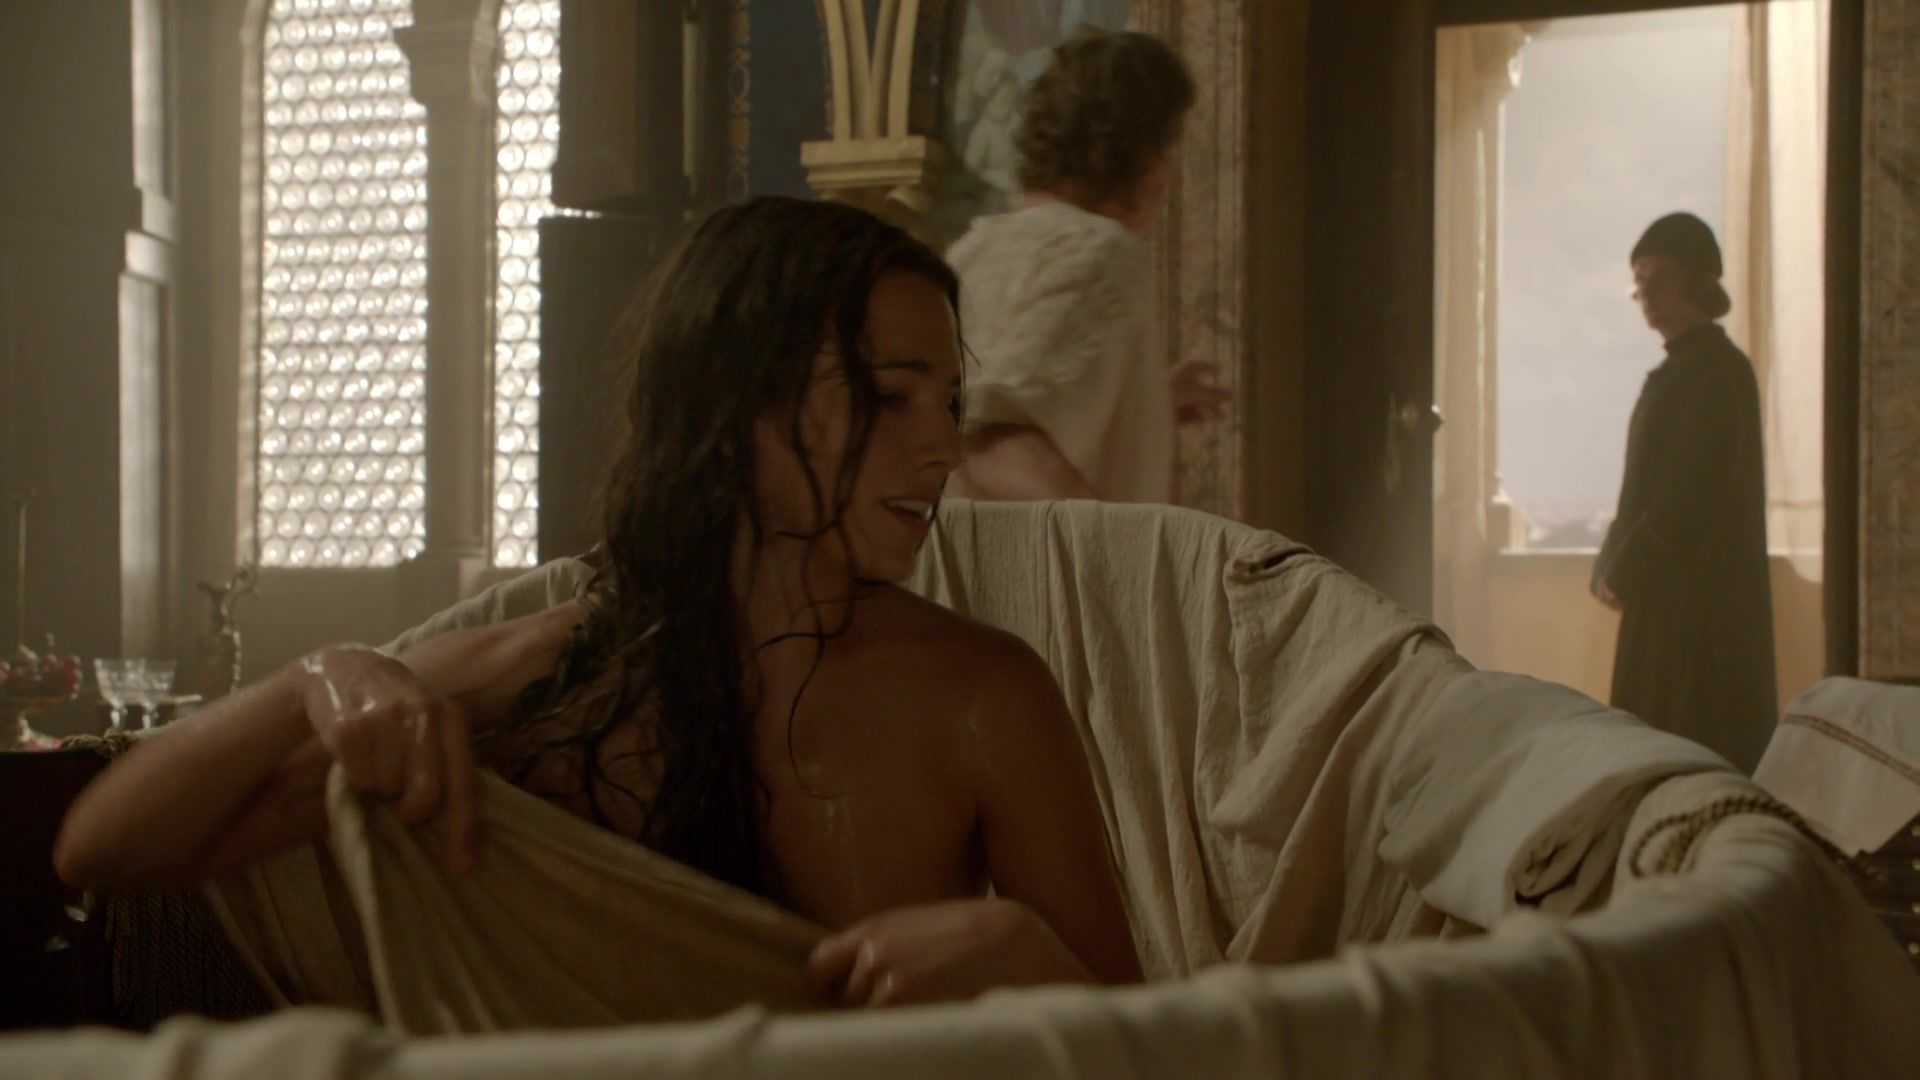 One Melia Kreiling topless video | TV movie "The Borgias" High